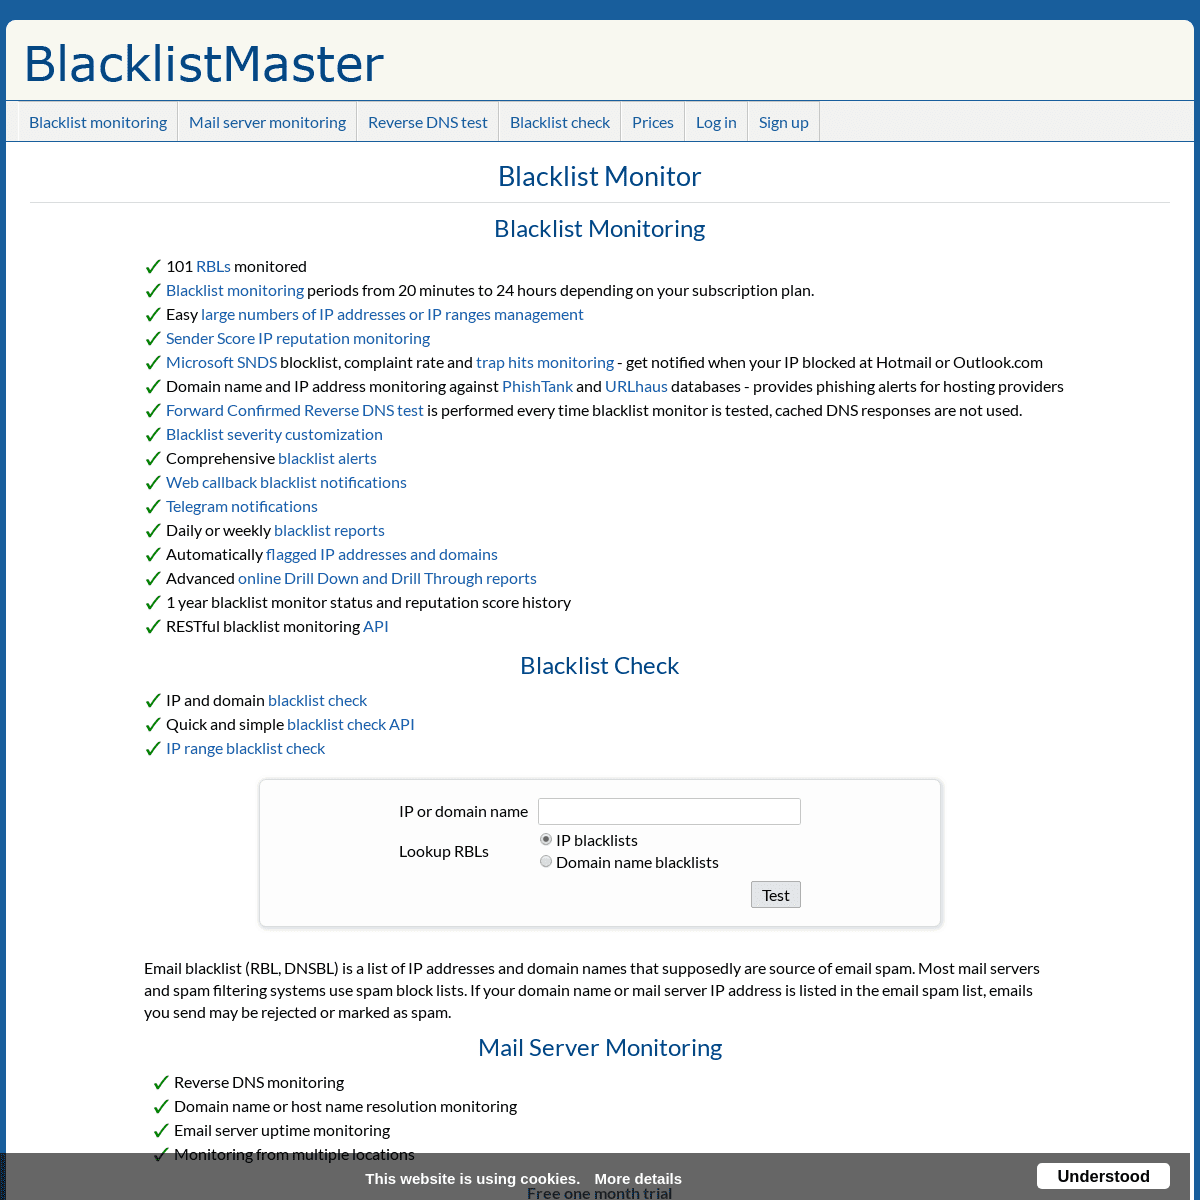 A complete backup of blacklistmaster.com